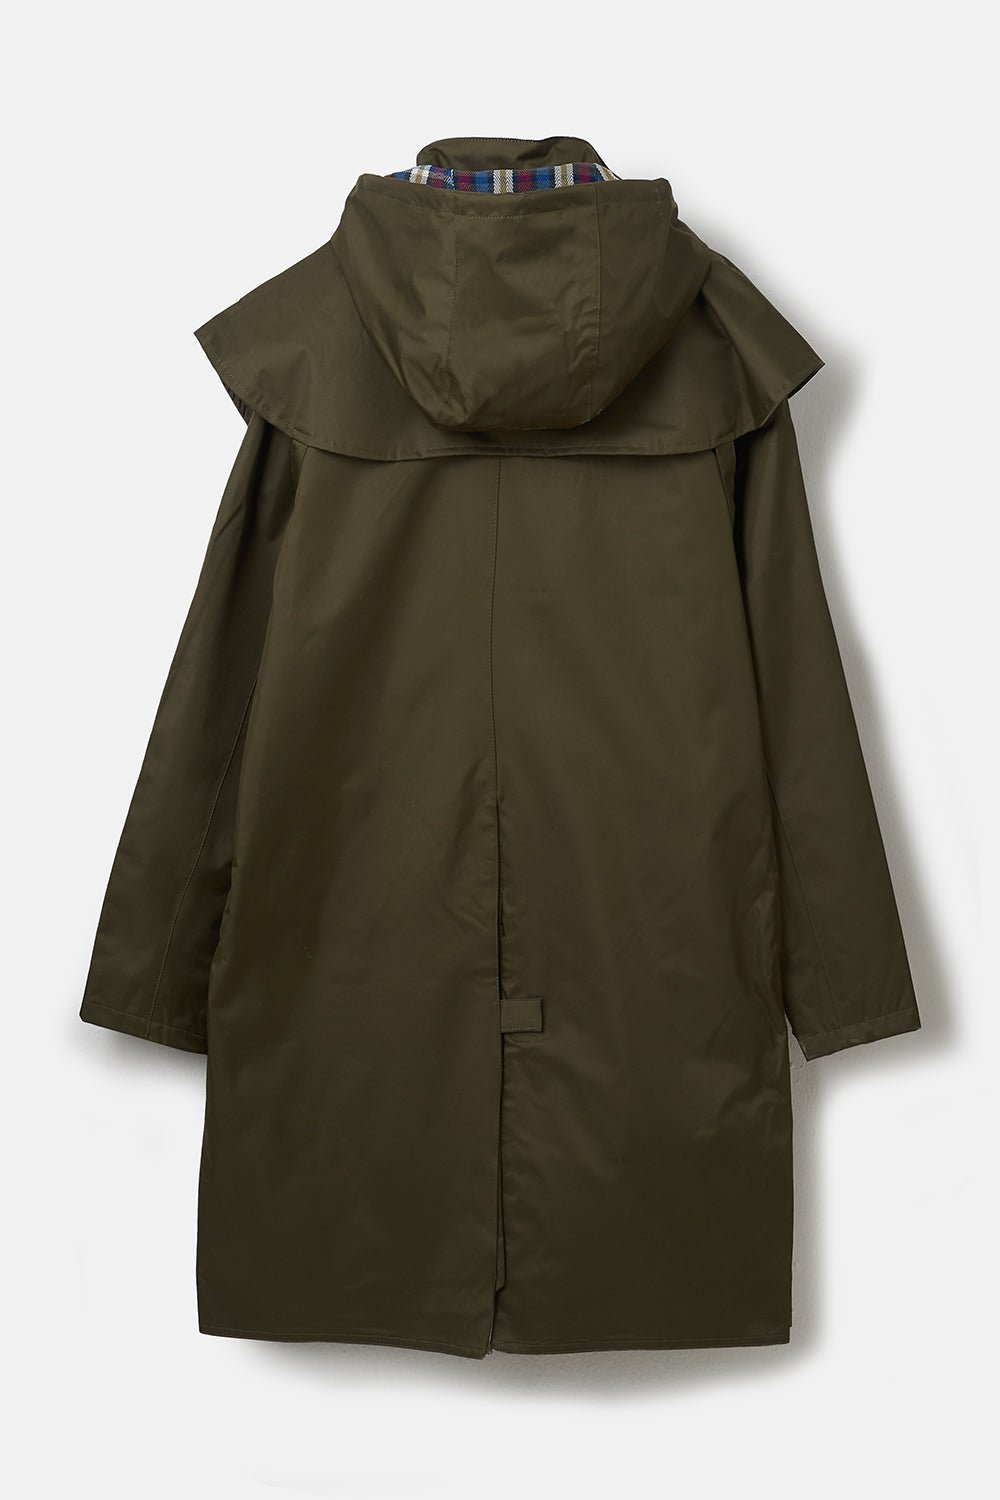 Outrider 3/4 Length Waterproof Raincoat - Fern